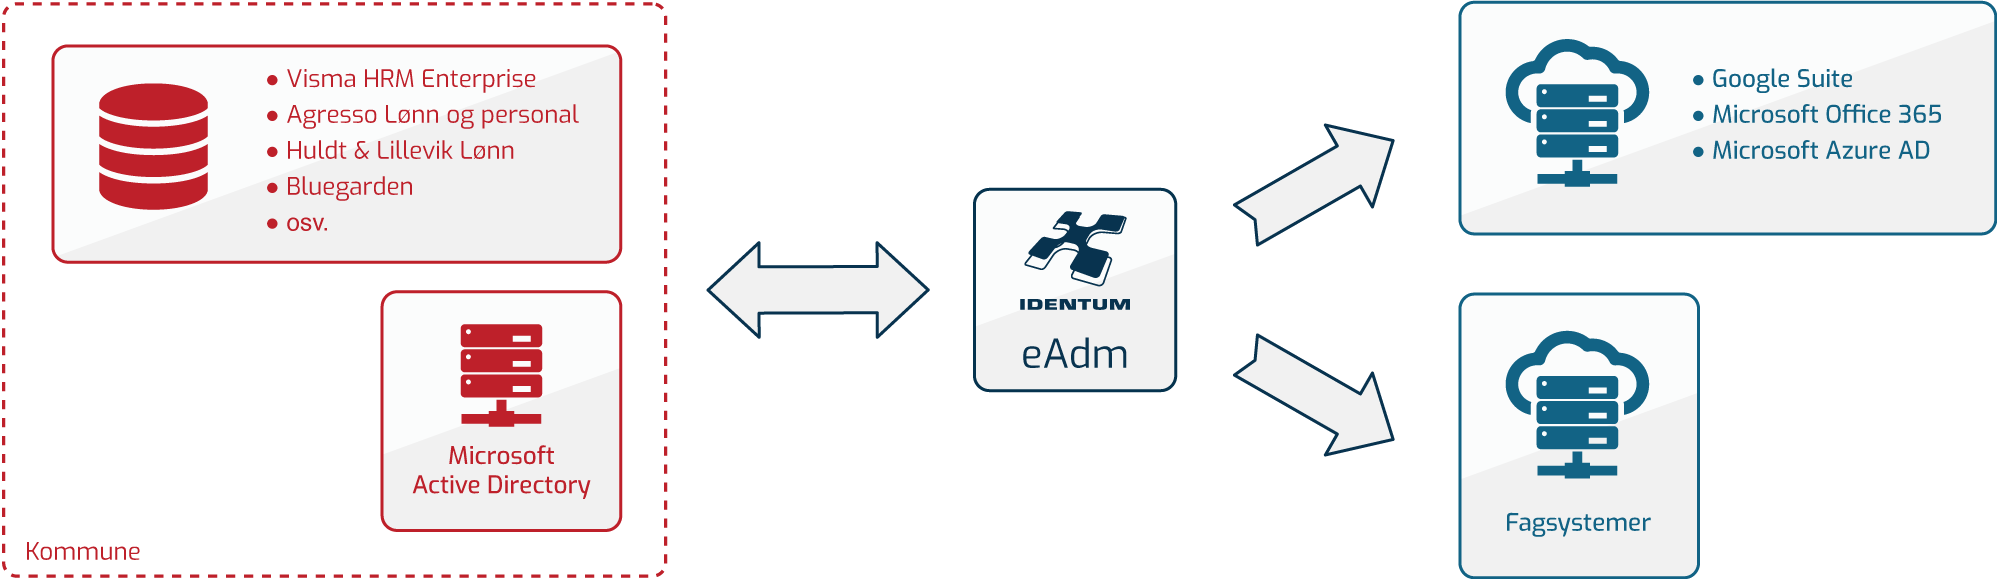 Figur - Overordnet arkitektur for eAdm.